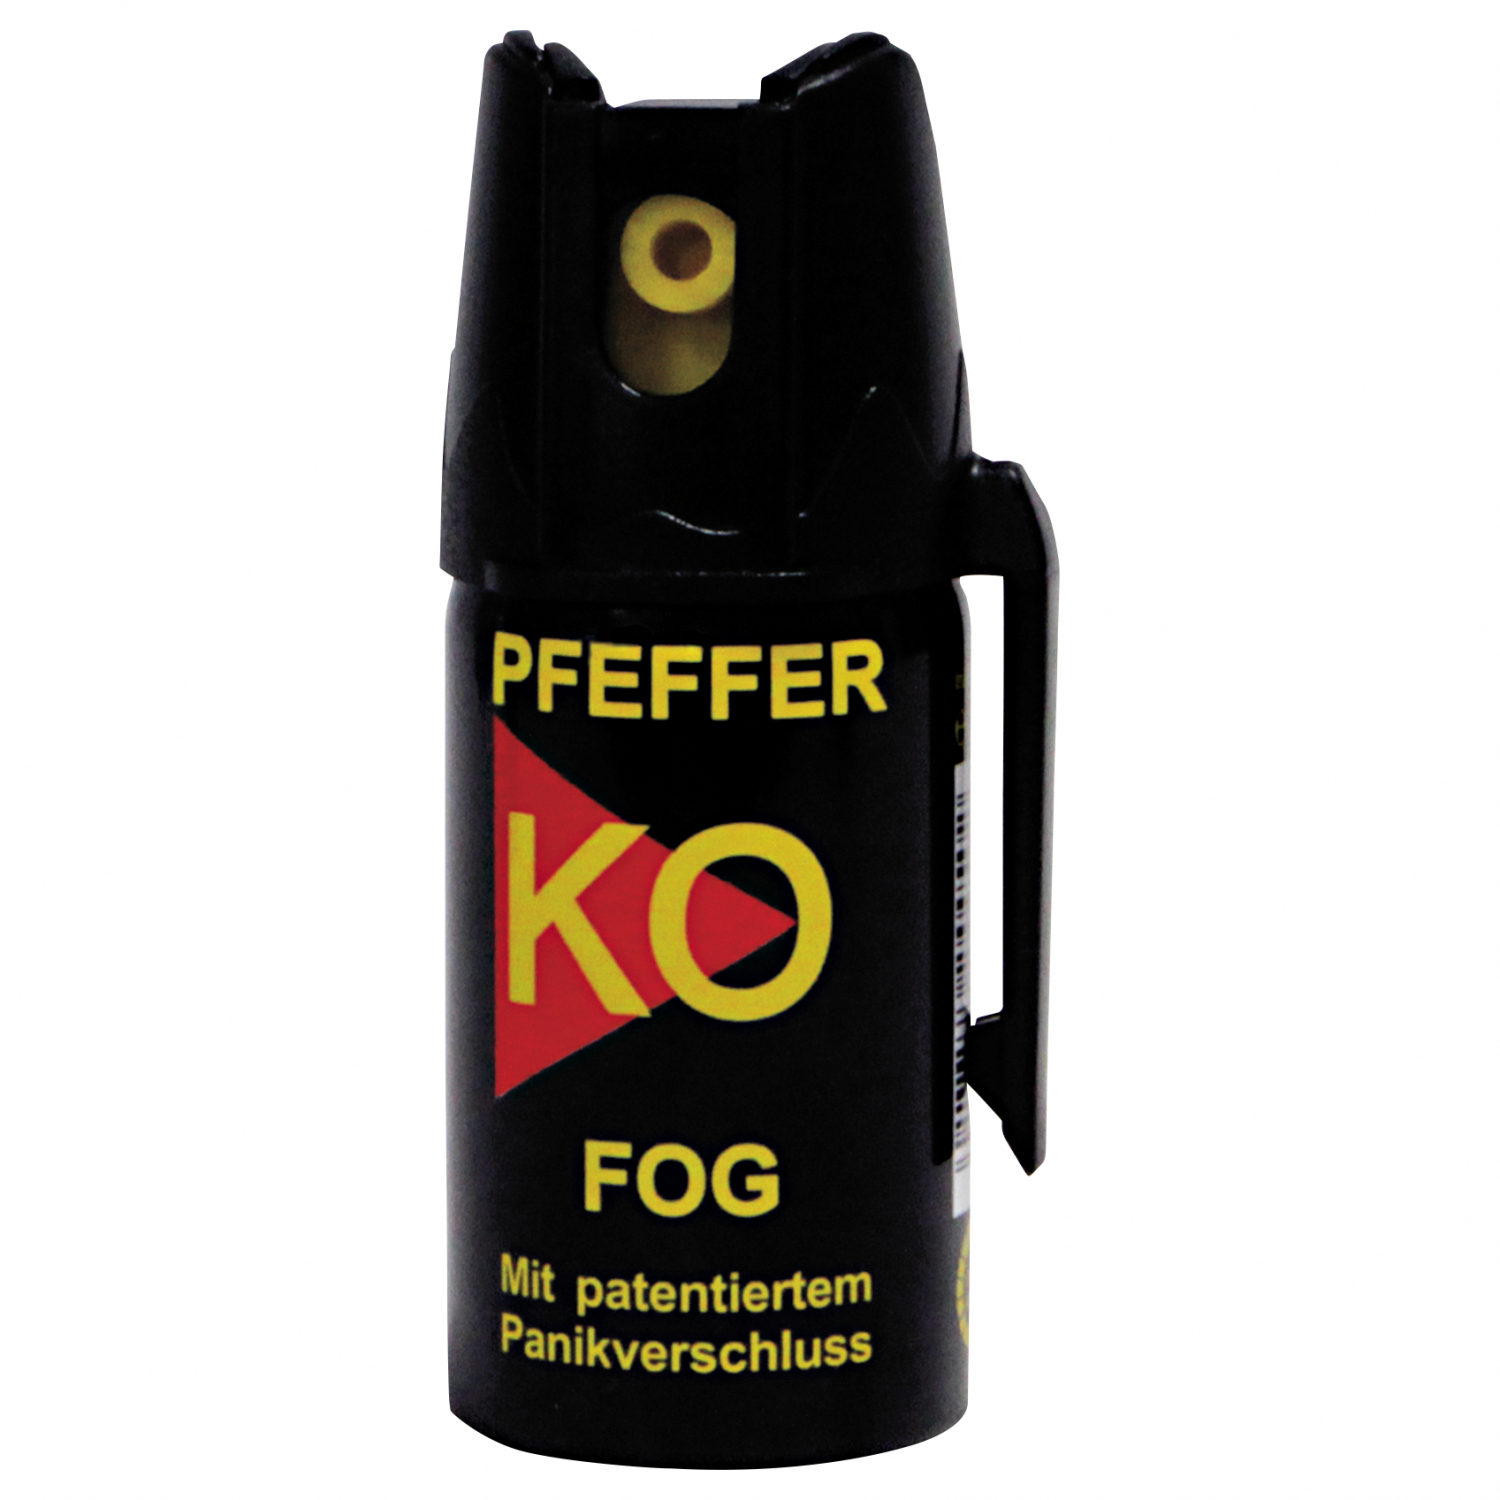 Verteidigungsspray Pfeffer-KO Fog 